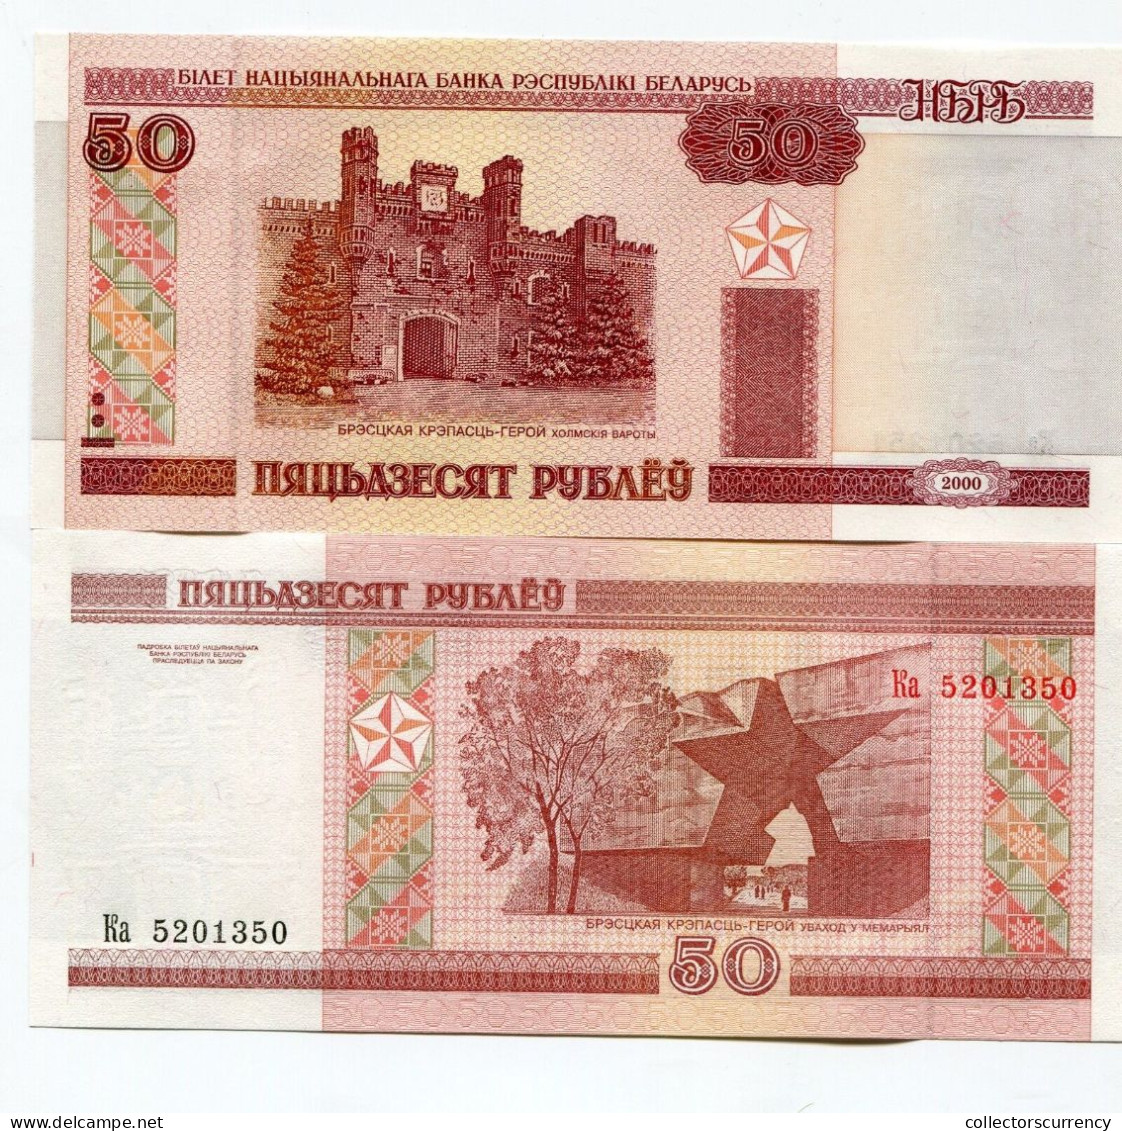 Belarus 50 Rublei 2000 Banknote Paper Money P25 X 10 Piece Lot - Belarus